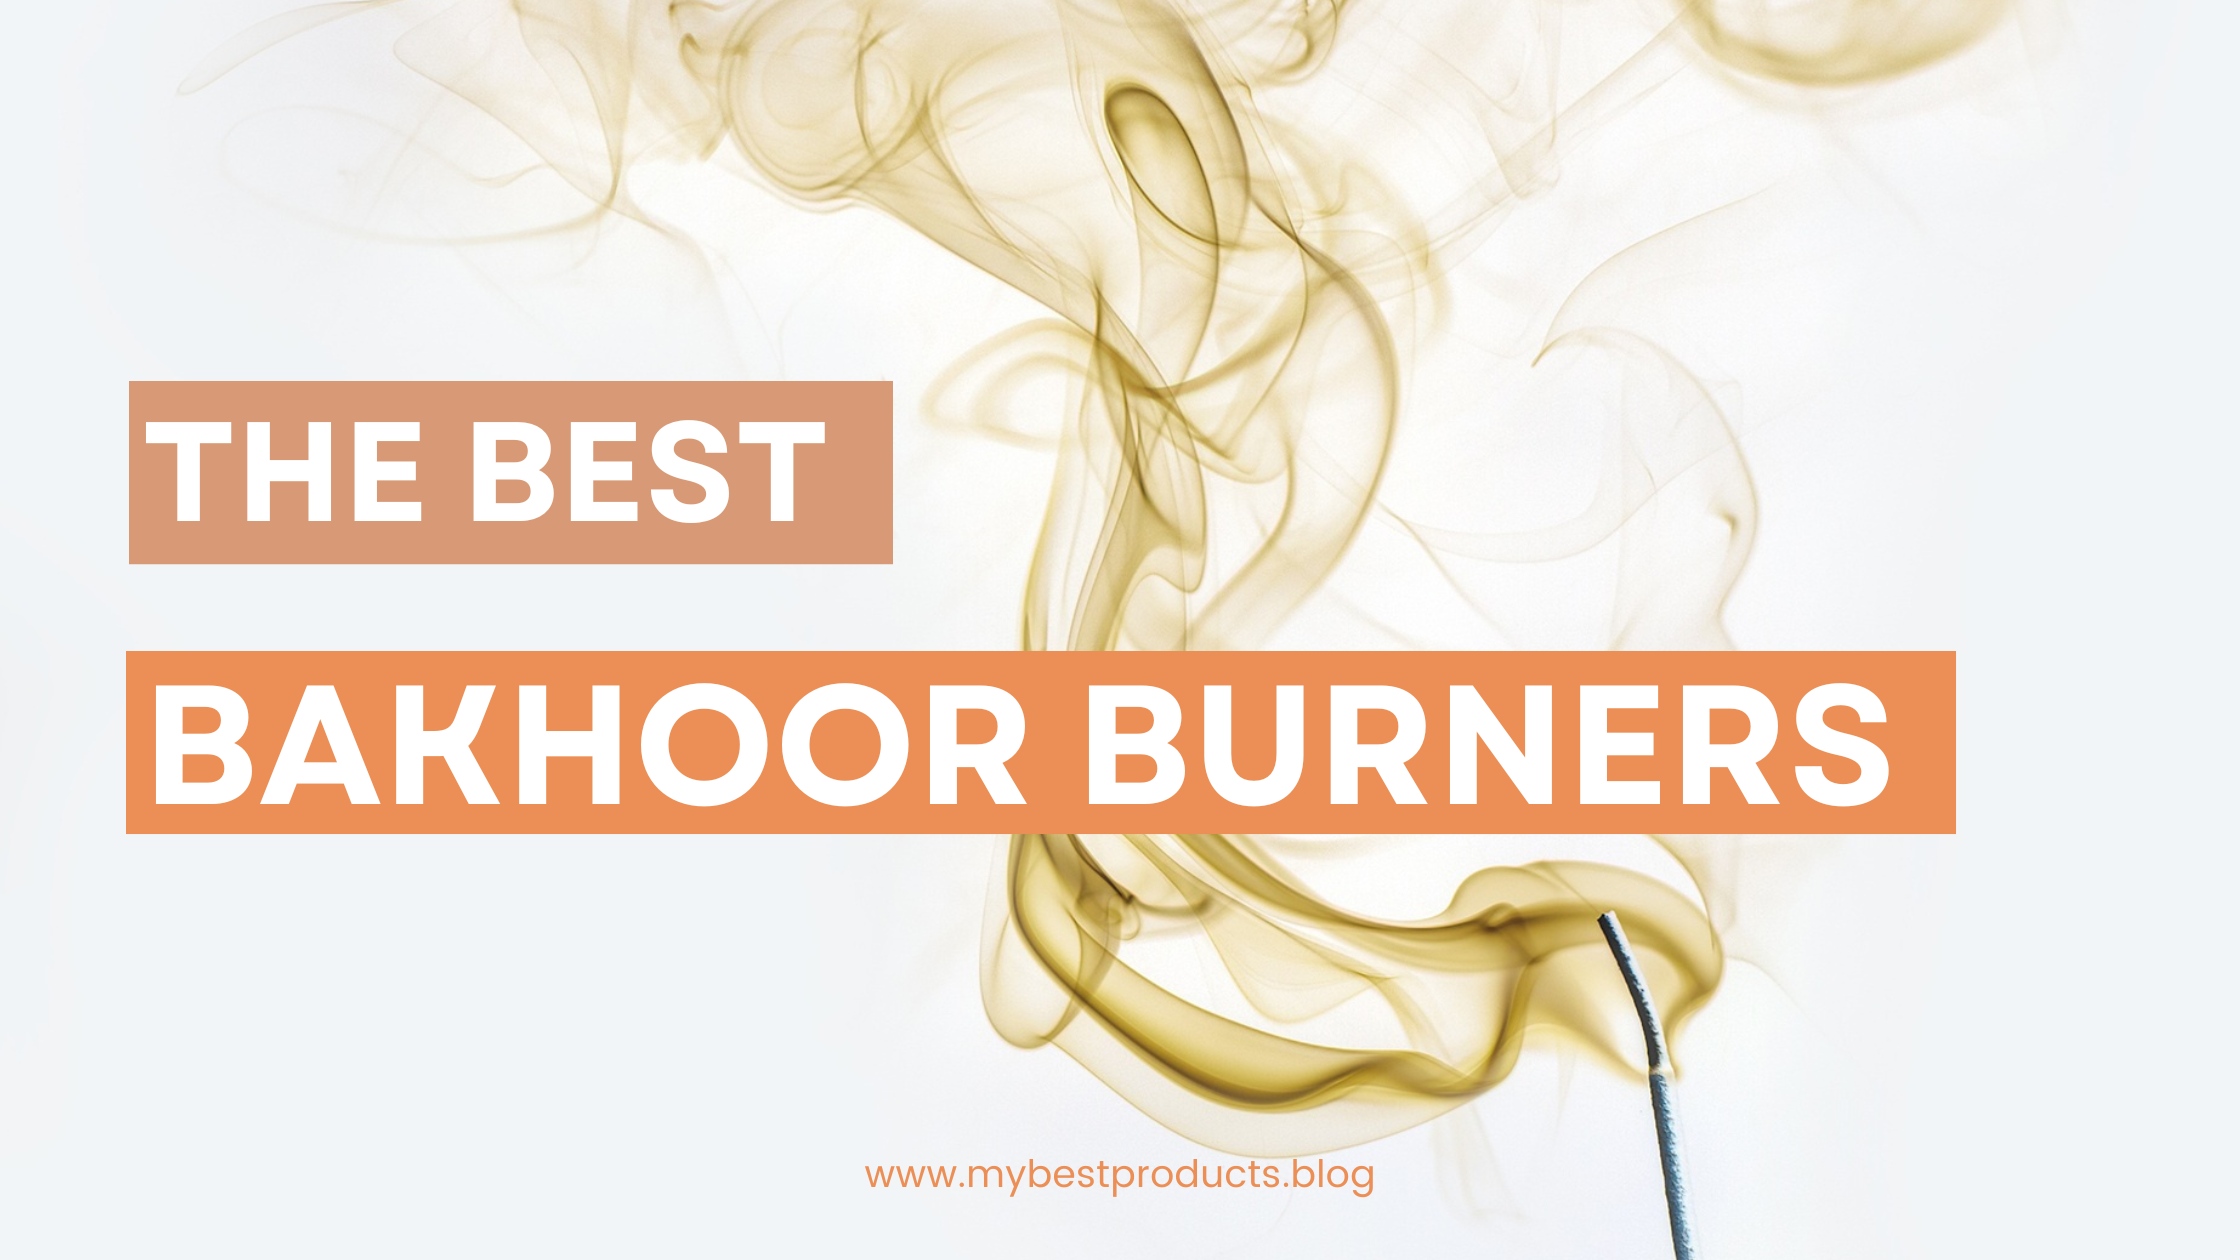 The best bakhoor burners for Ramadhan